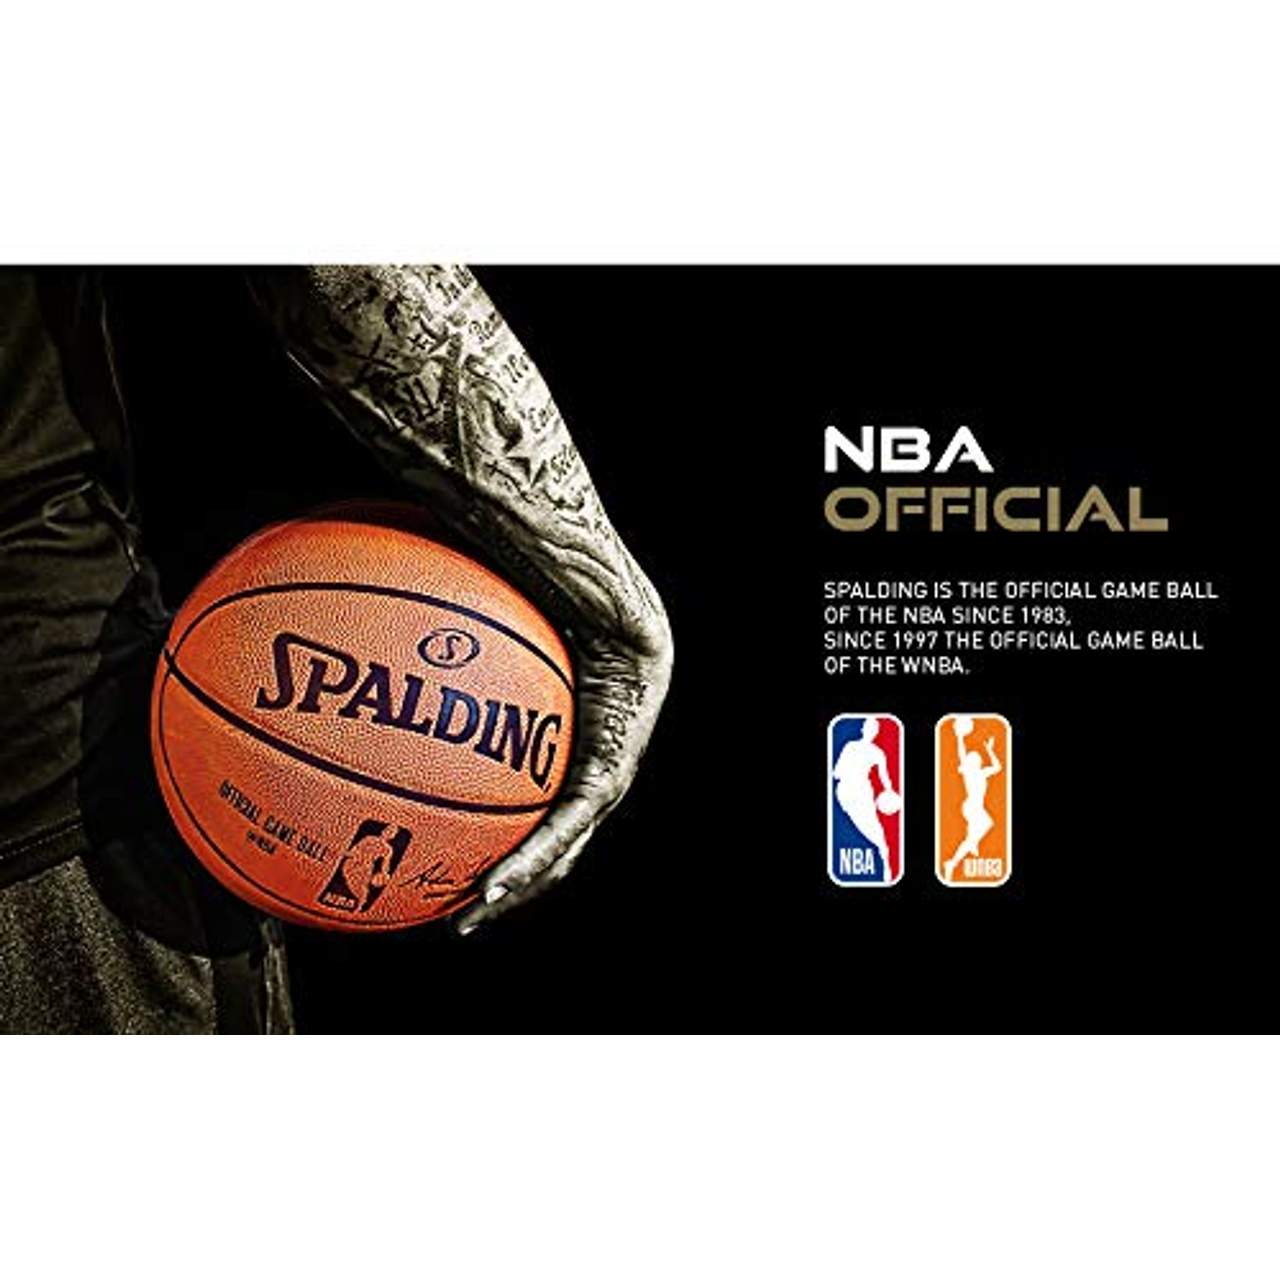 Spalding Unisex-Adult 3001587013917_7 Basketball